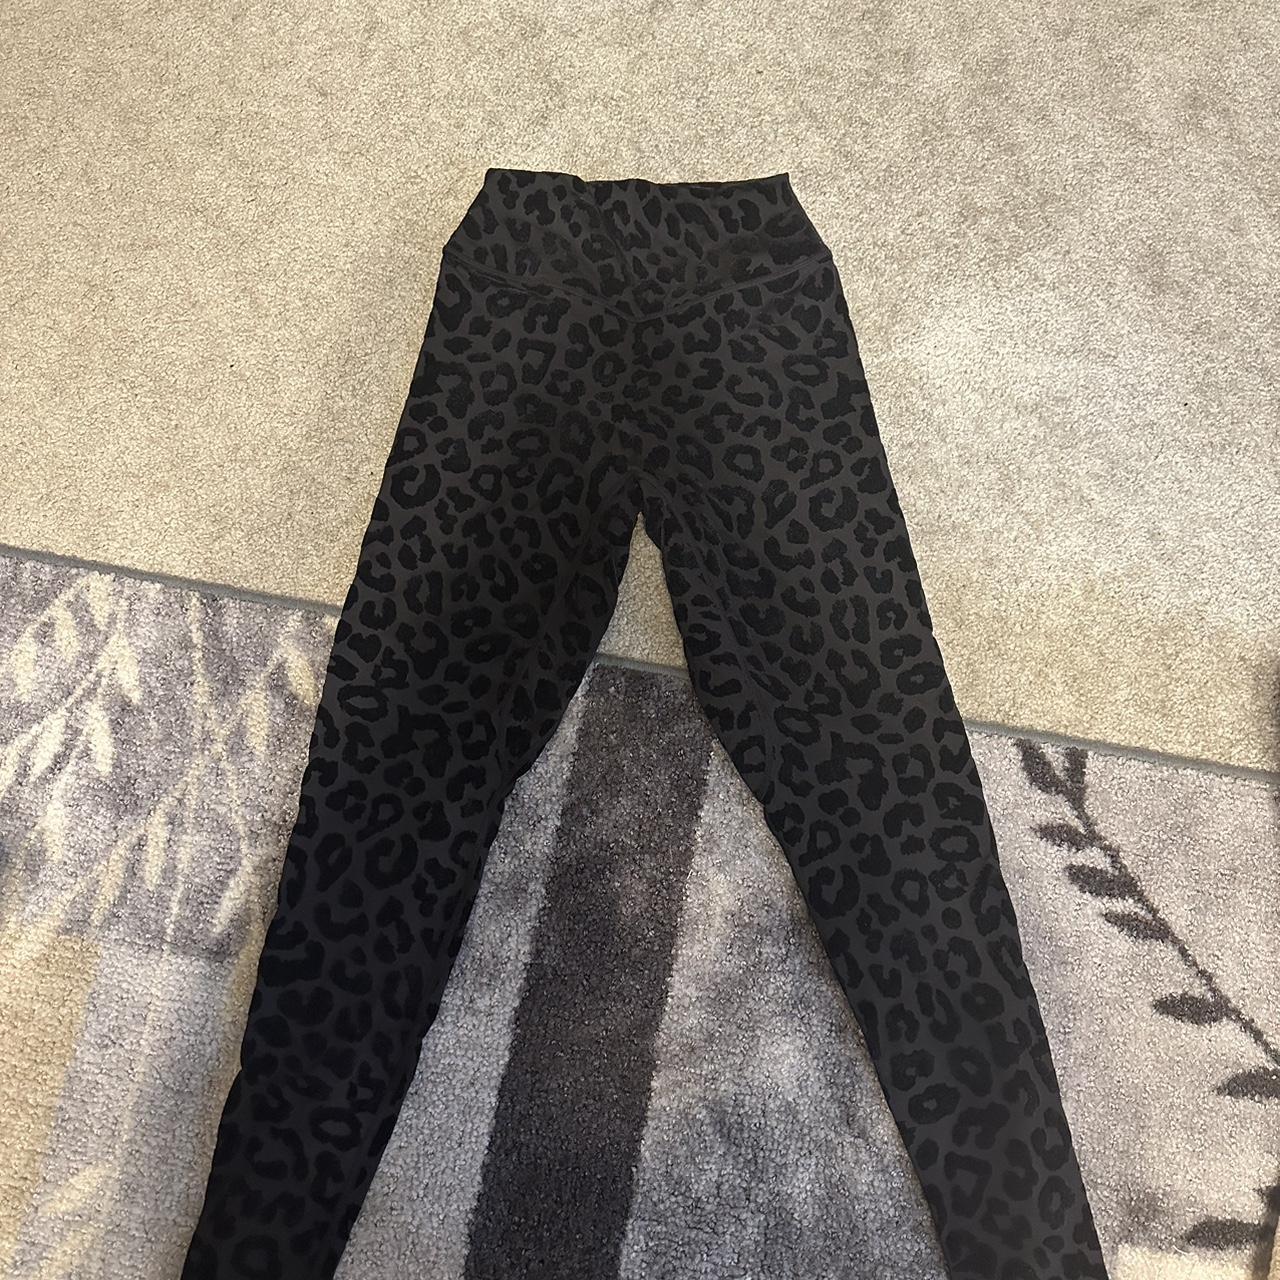 black cheetah print leggings, barely worn and no - Depop